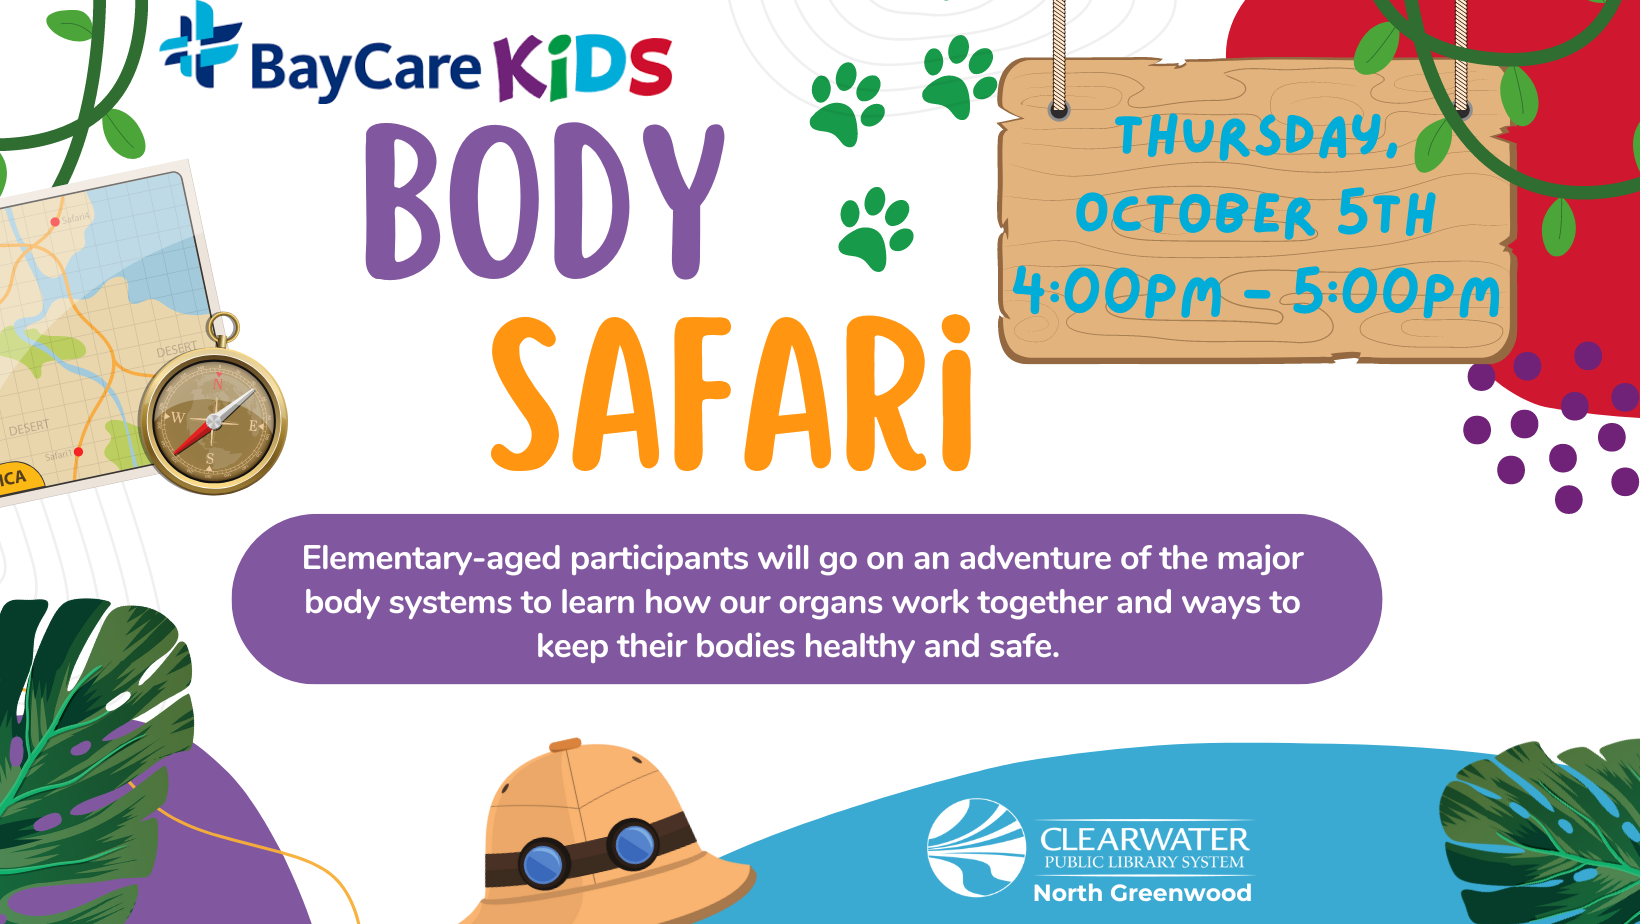 Body Safari with BayCare Kids